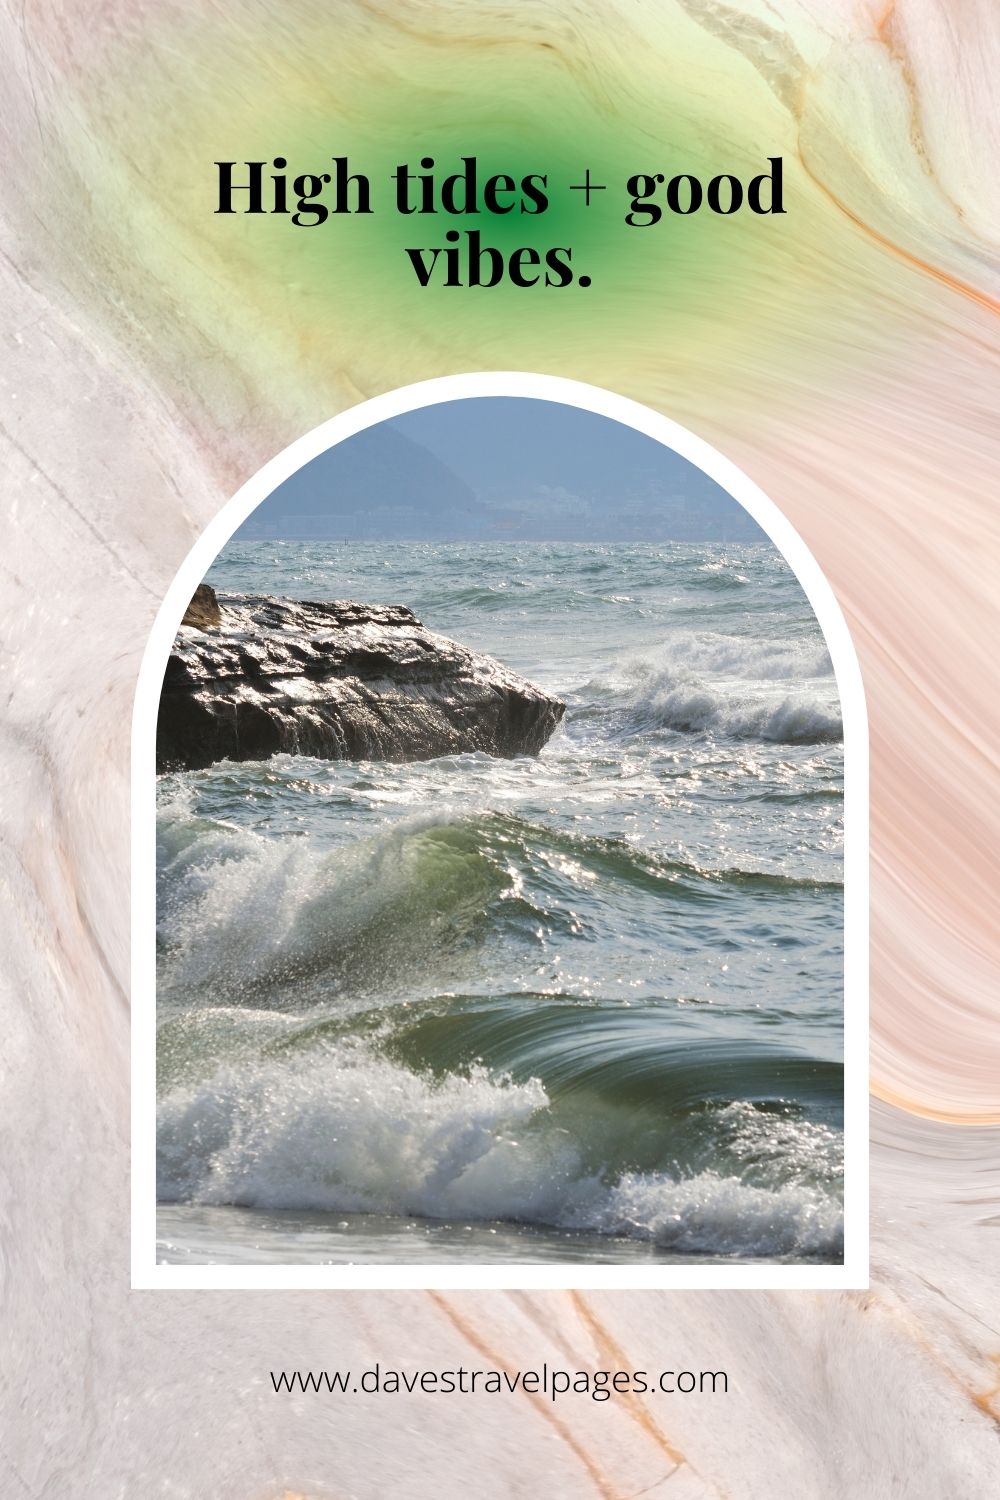 High tides + good vibes.